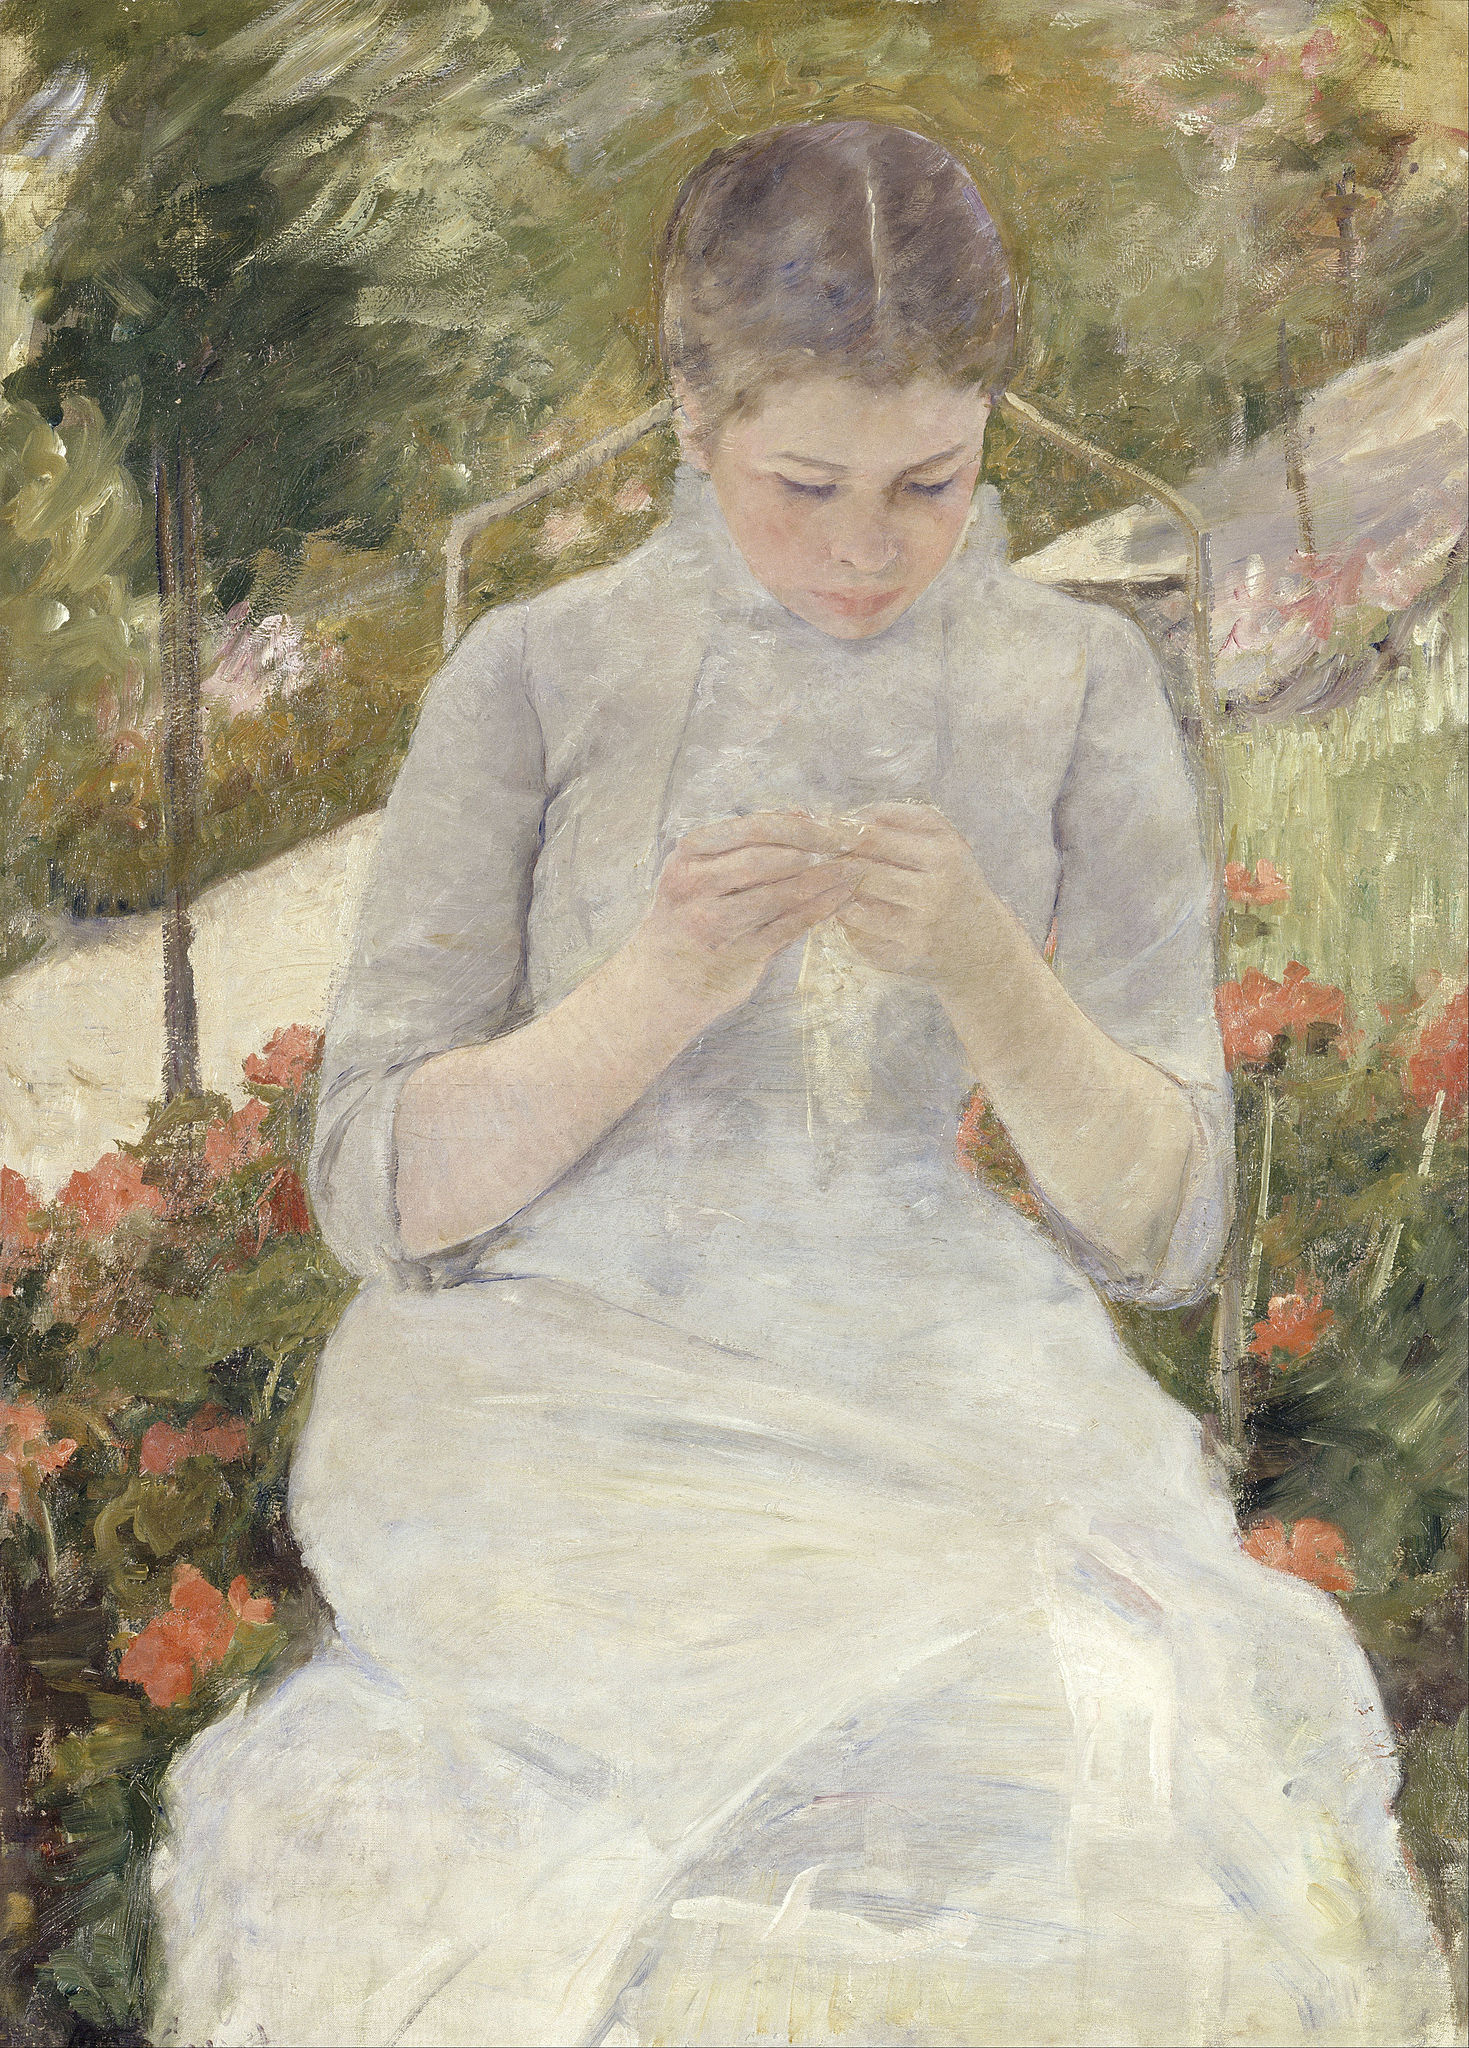 Girl in the Garden by Mary Cassatt - 1880-1882 - 65 x 92 cm Musée d'Orsay